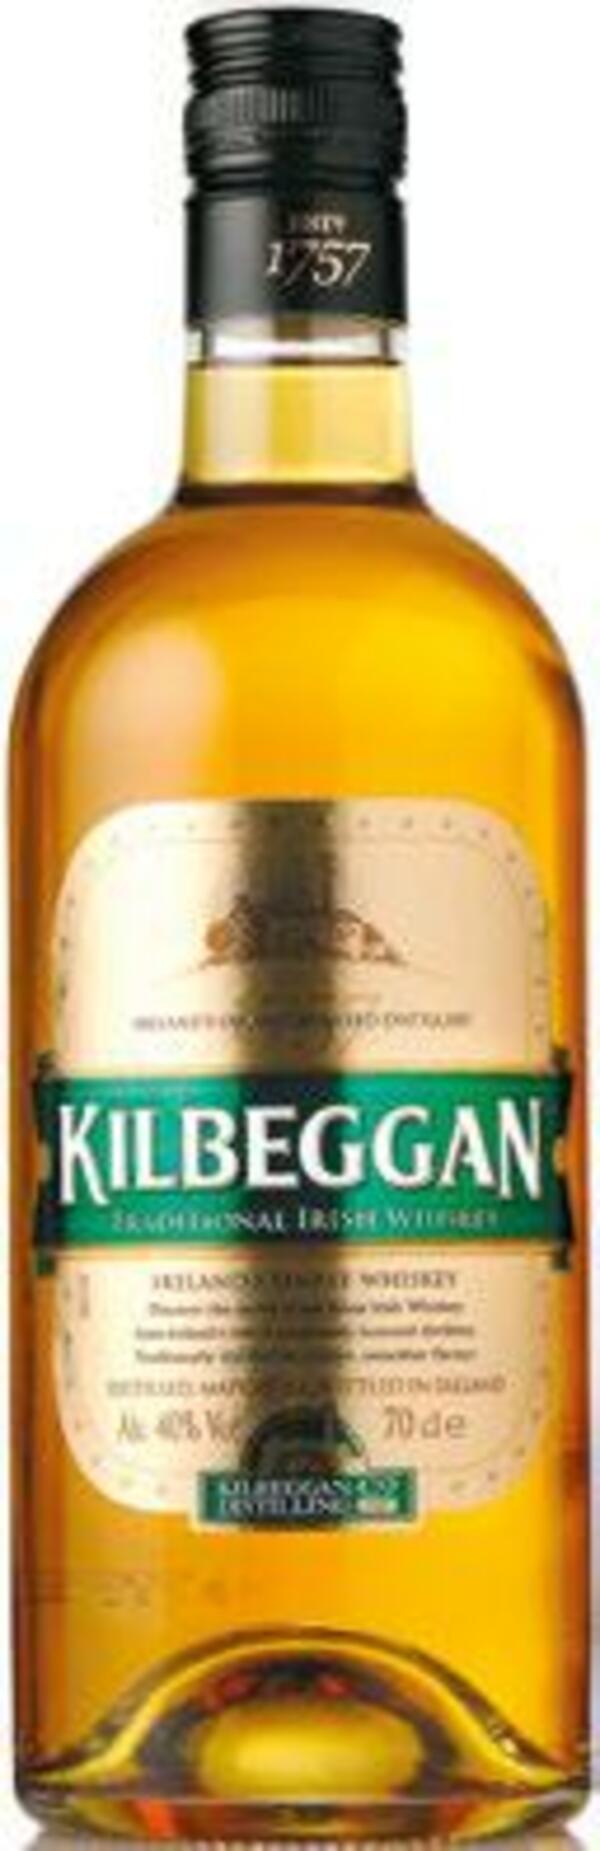 Bild 1 von Kilbeggan Irish Whiskey